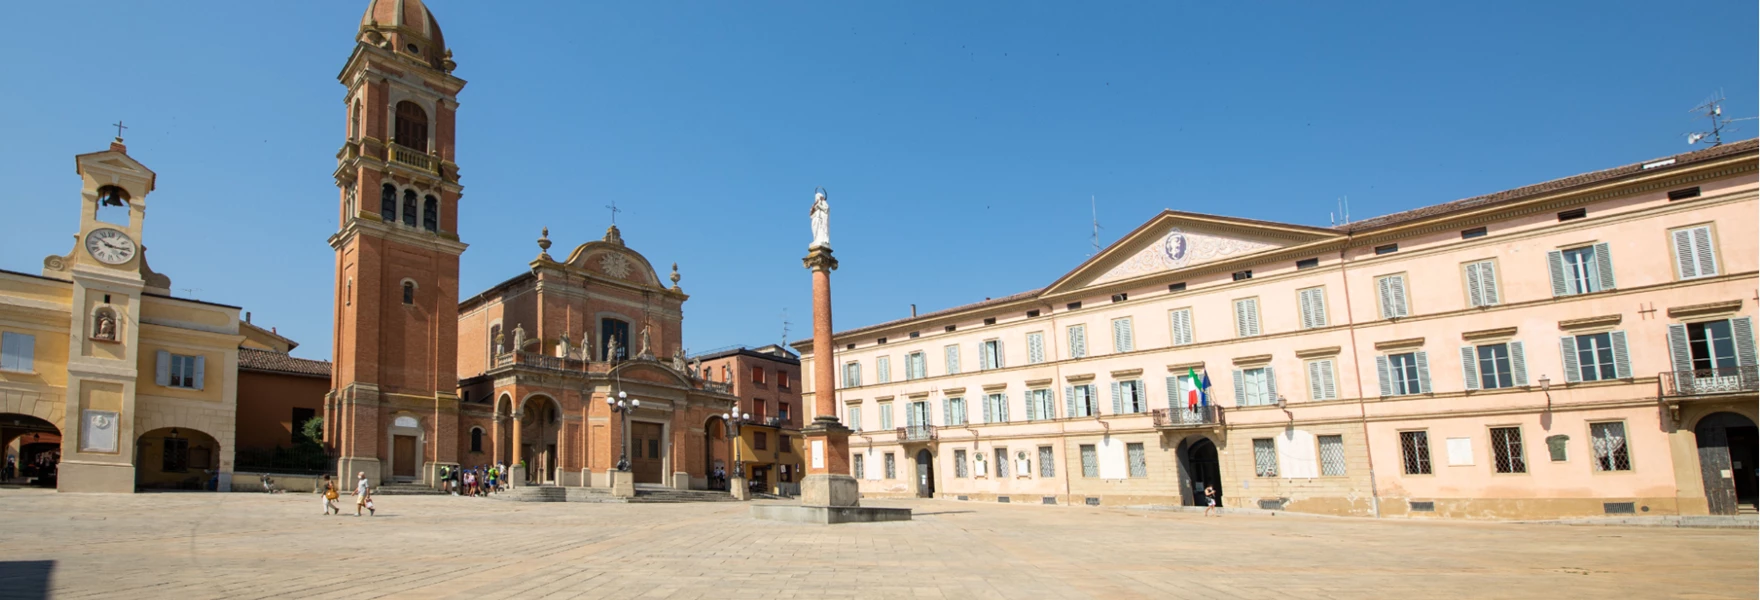 Piazza Castel San Pietro Terme 